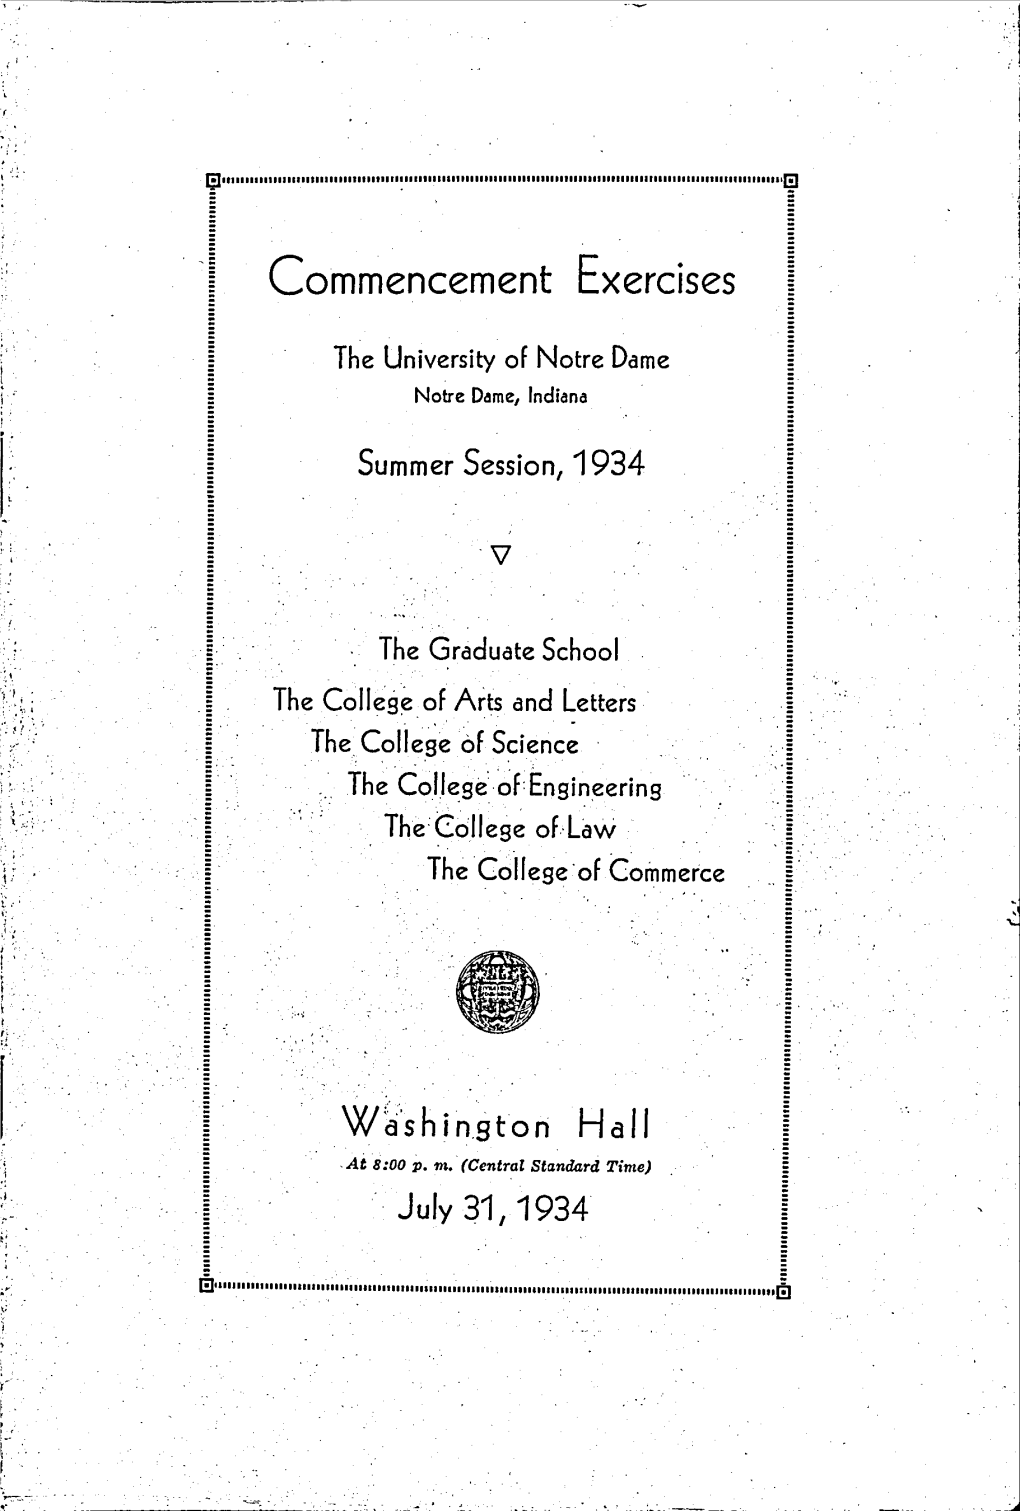 1934-07-31 University of Notre Dame Commencement Program